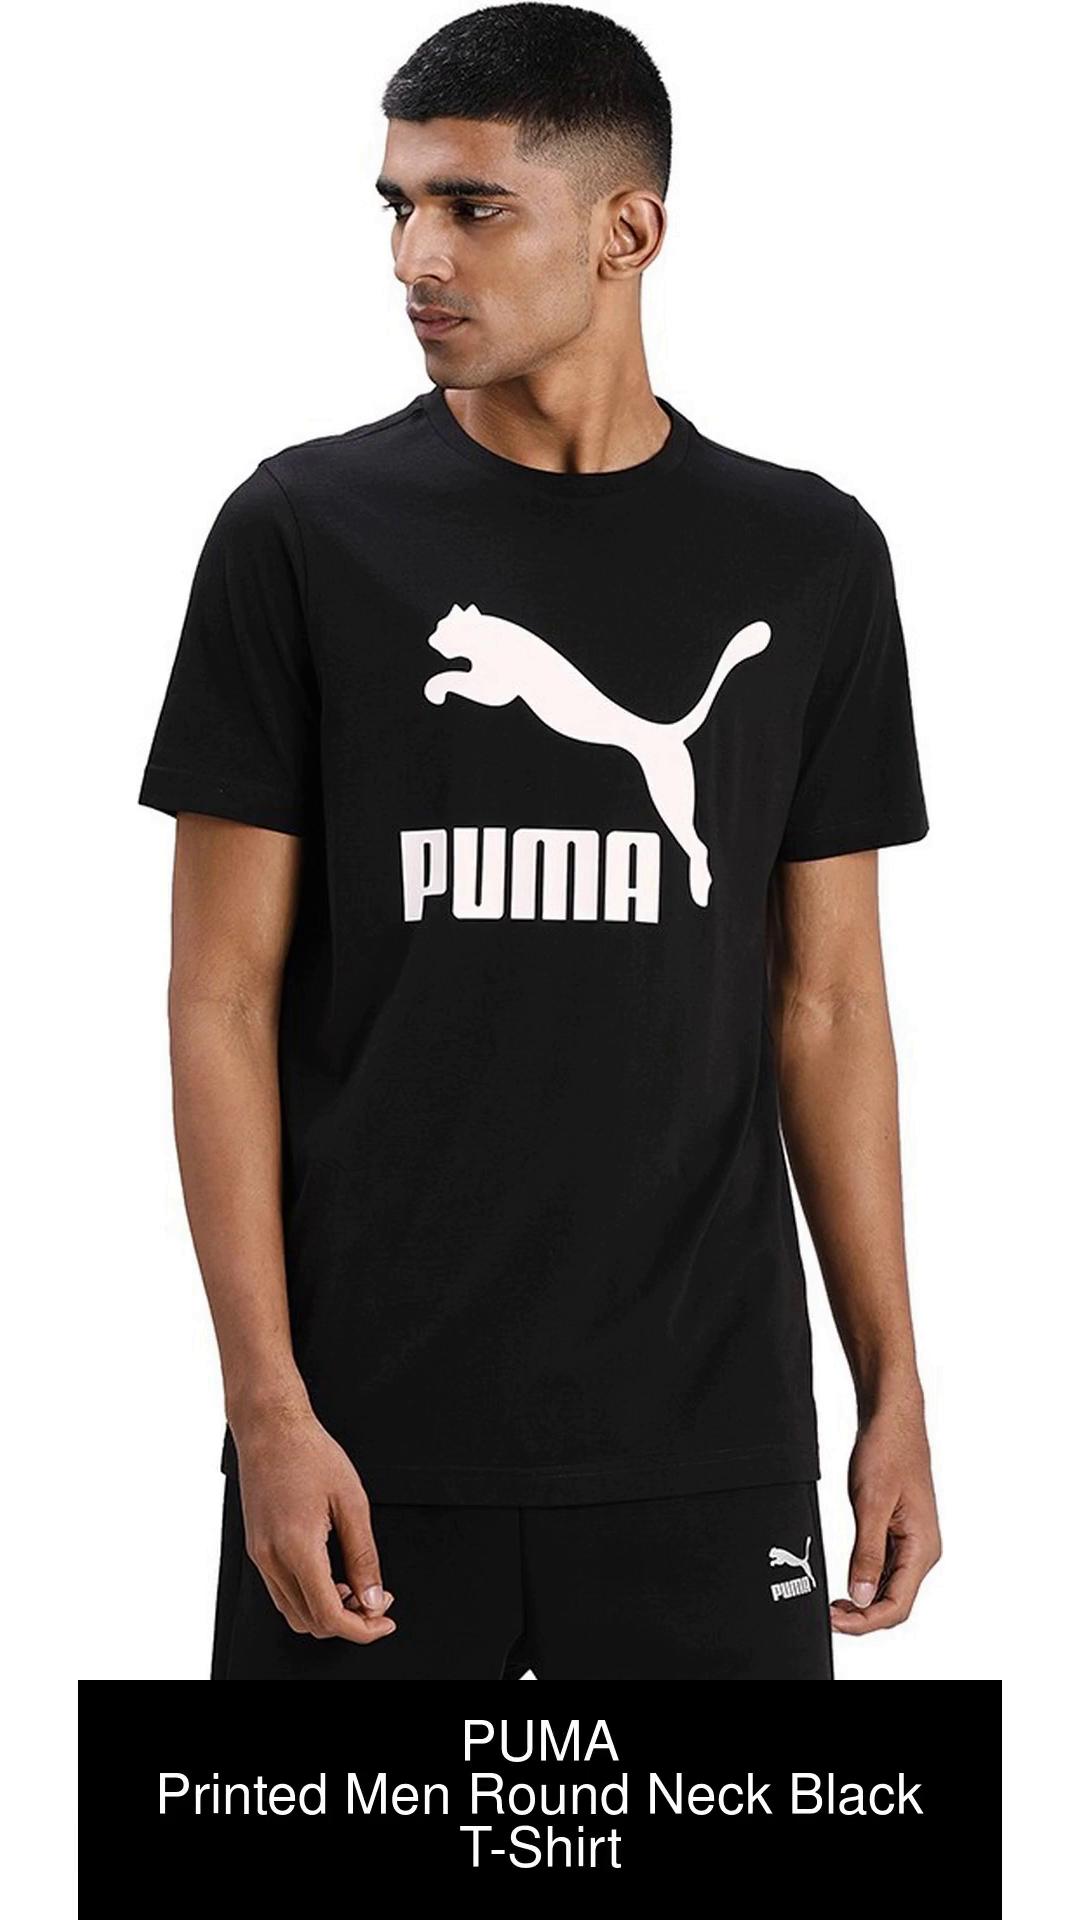 PUMA Solid Neck PUMA Solid T-Shirt Prices Men Round Best T-Shirt Black Round in Online Black - Buy Men at India Neck